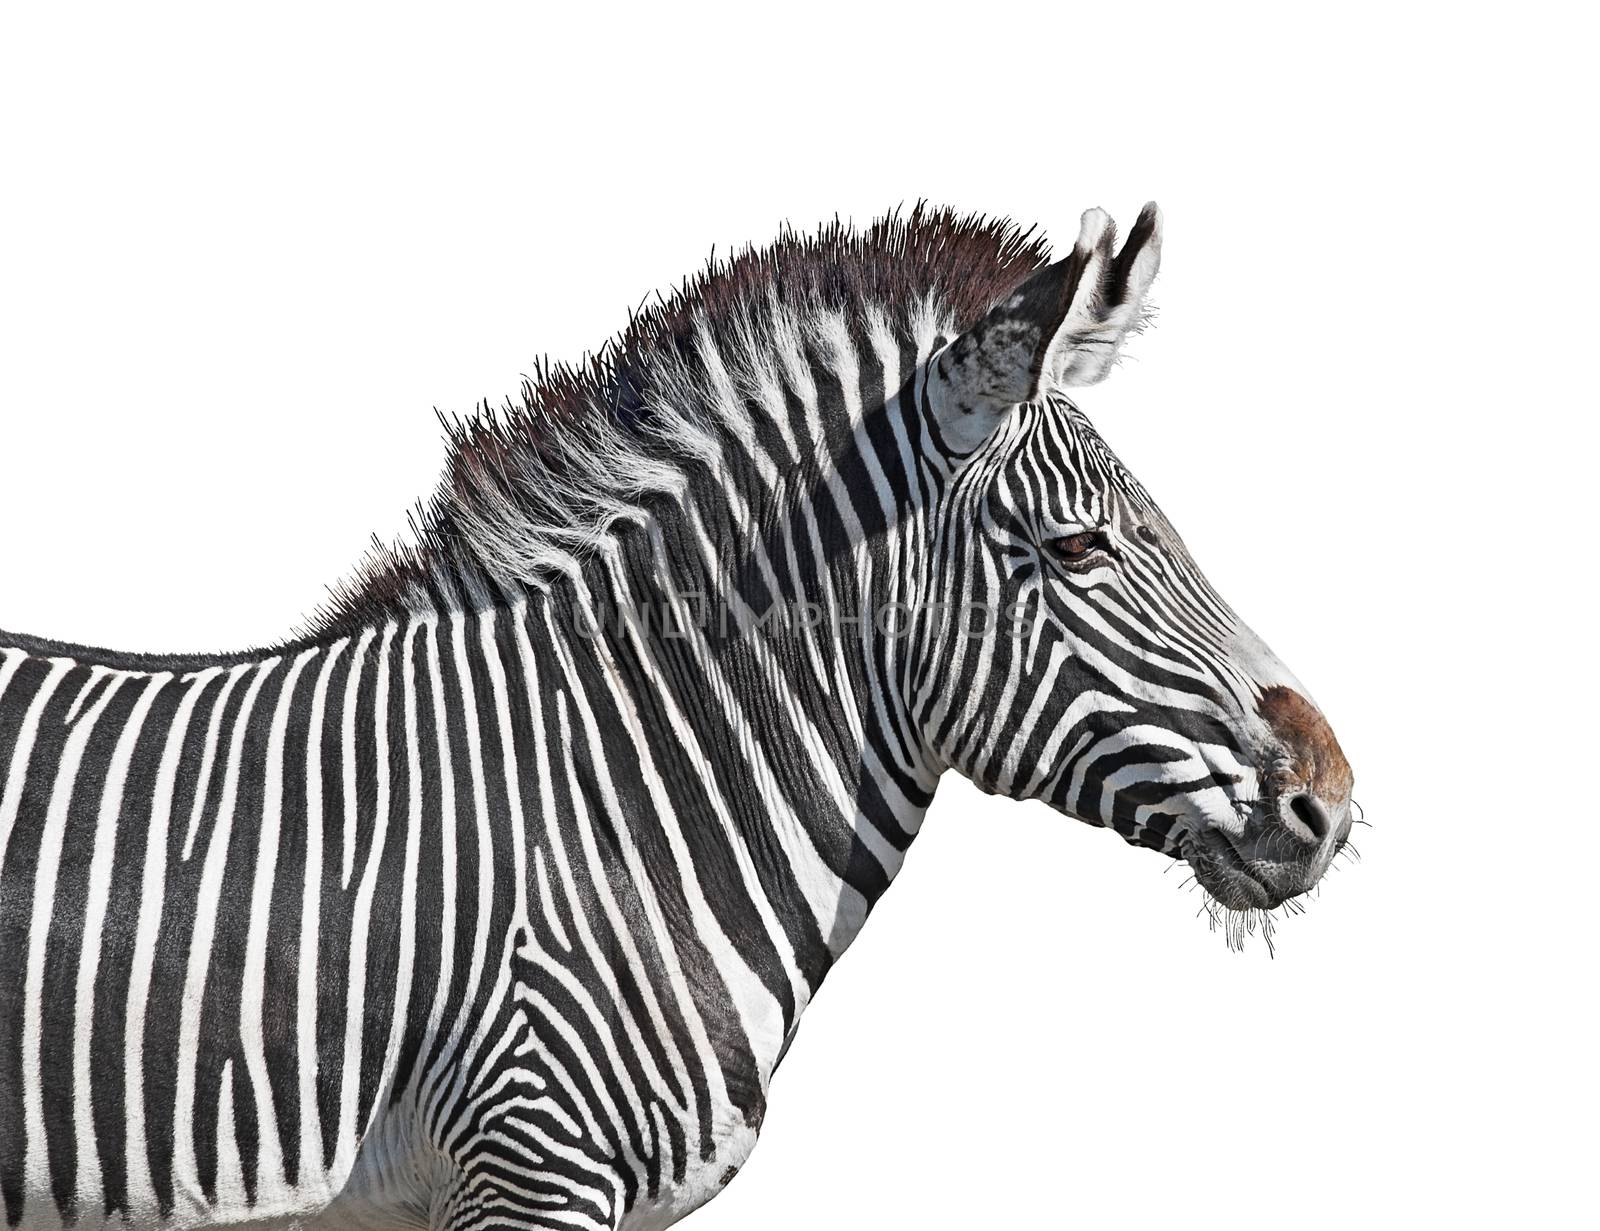 Grevy's zebra close-up cutout by vkstudio